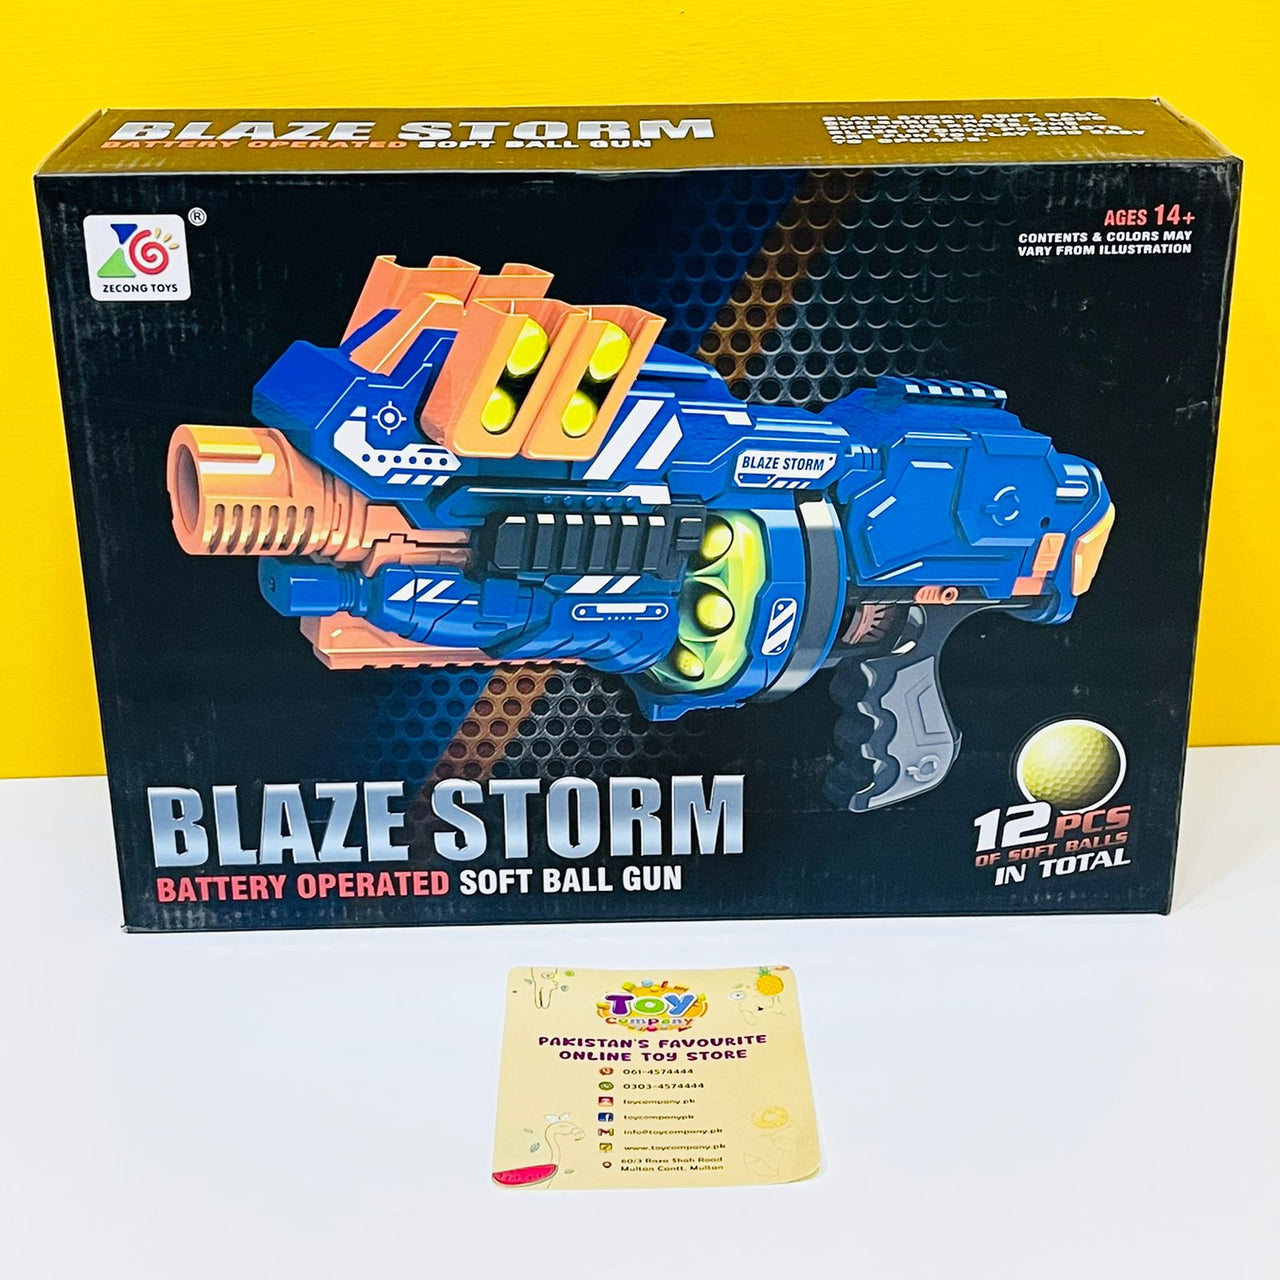 Blaze Storm Electric Air Soft Gun Toy